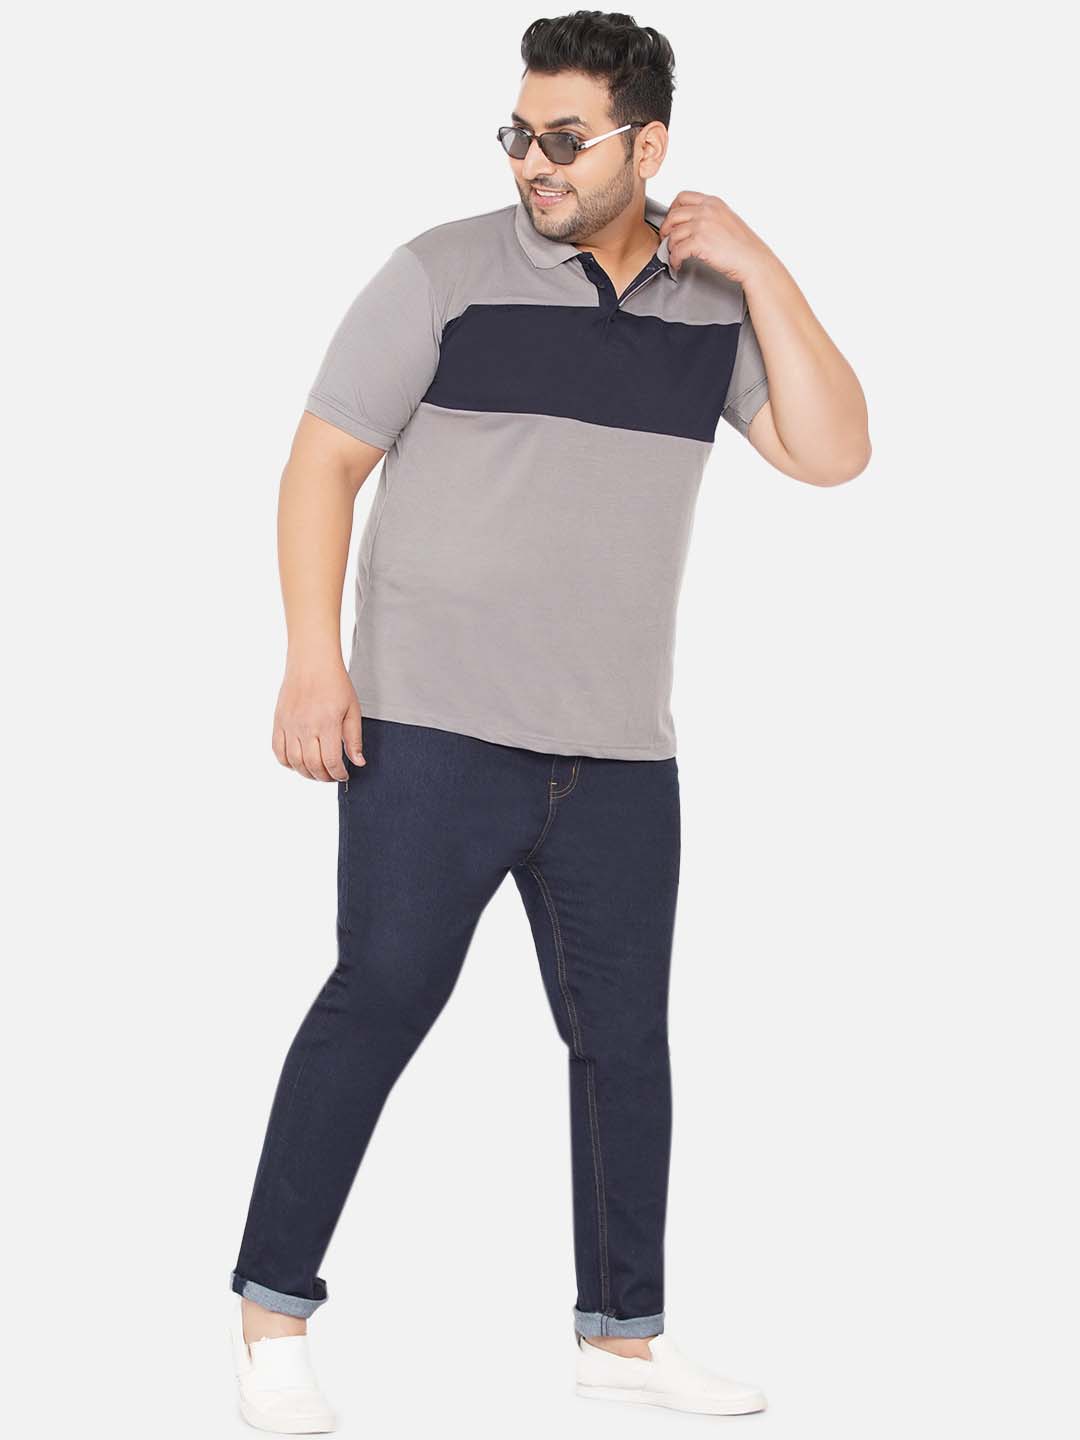 Plus Size Mens T shirts | Buy 3XL, 4XL, 5XL, 6XL Size Online